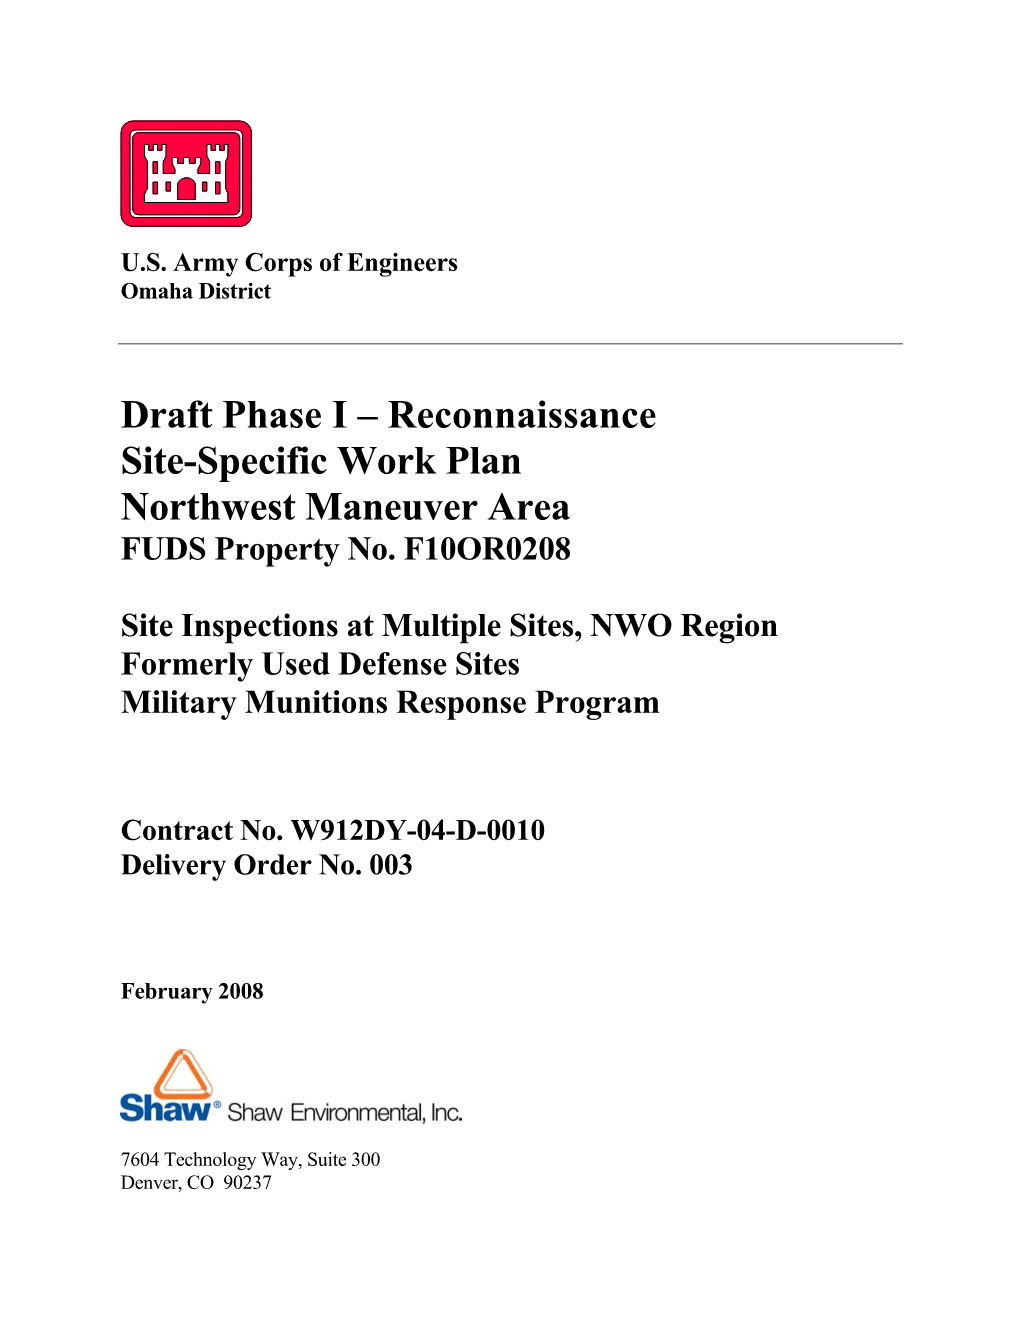 Draft Phase I – Reconnaissance Site-Specific Work Plan Northwest Maneuver Area FUDS Property No